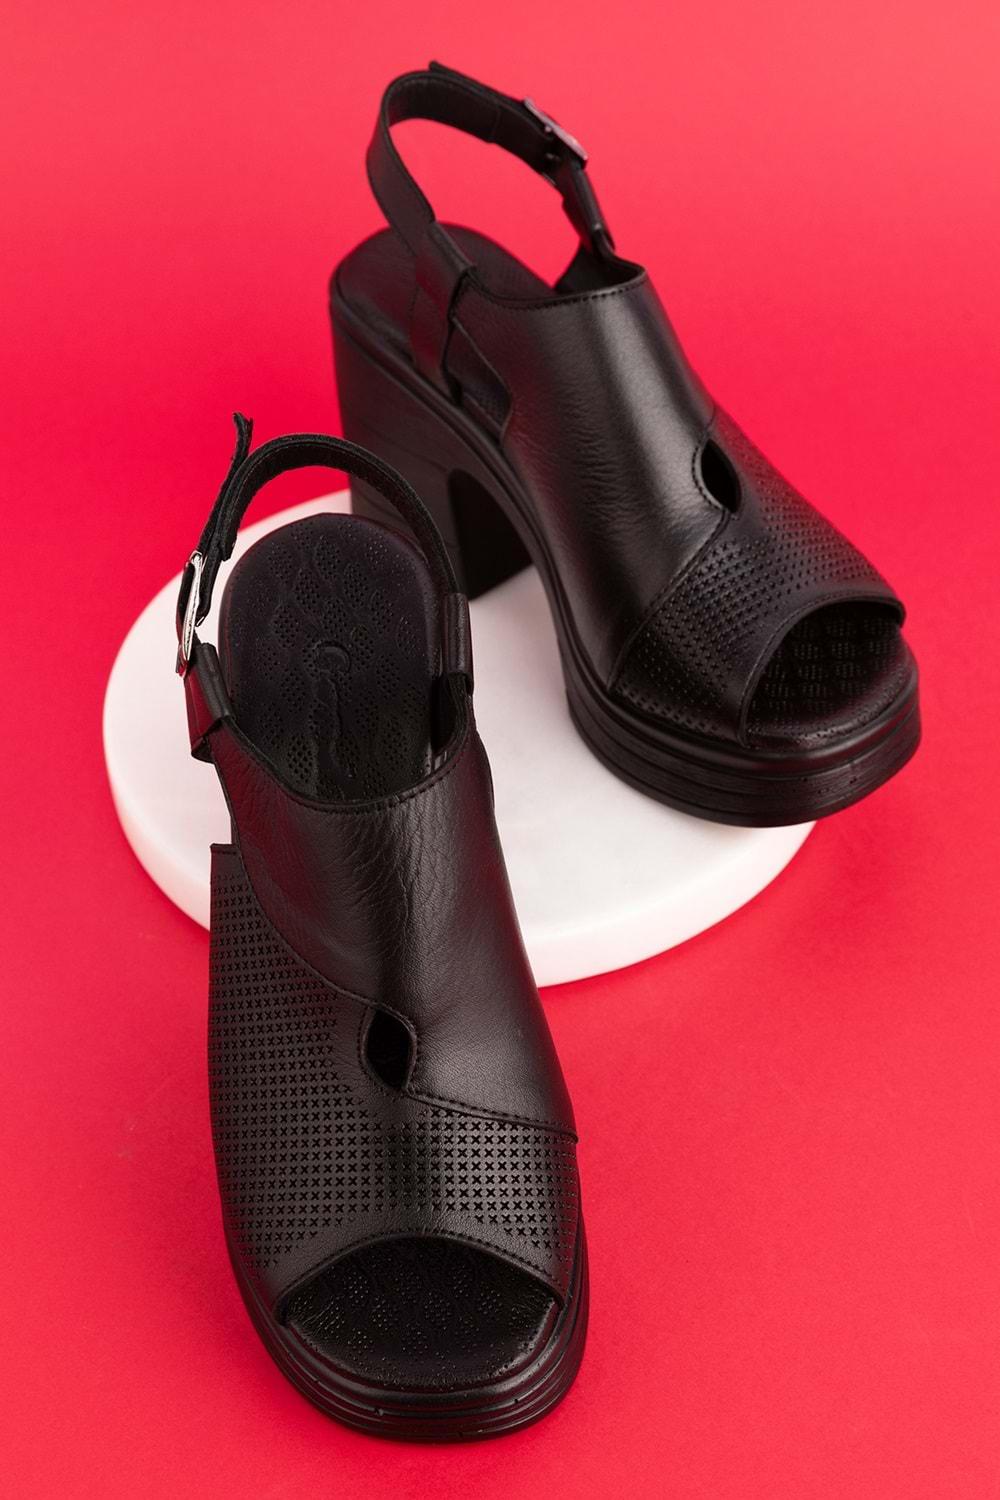 Gondol Kadın Hakiki Deri Platform Topuklu Şık Sandalet msa.56 - Siyah - 40